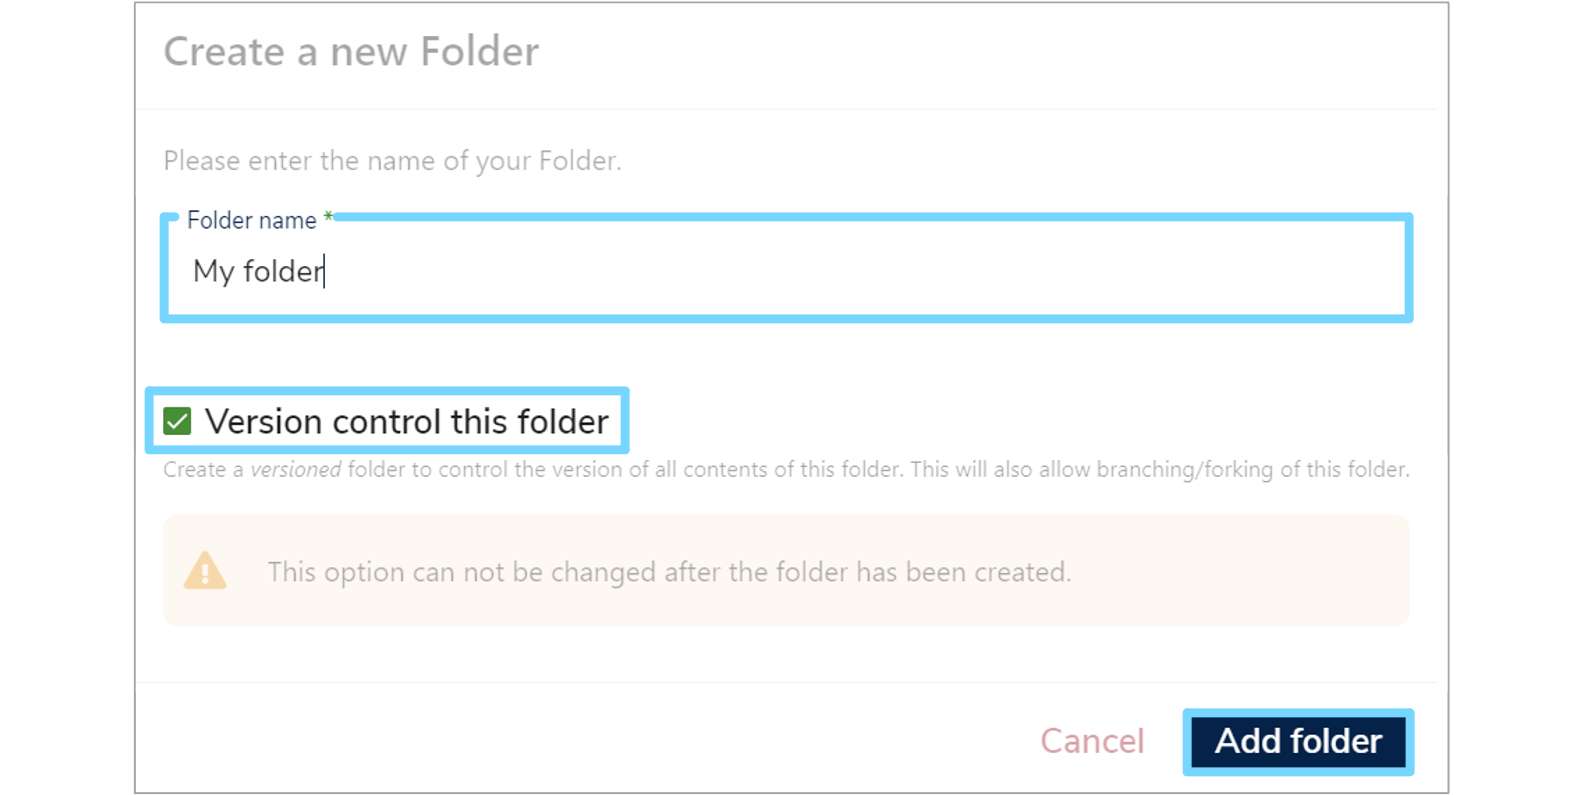 Create a new Folder dialogue box